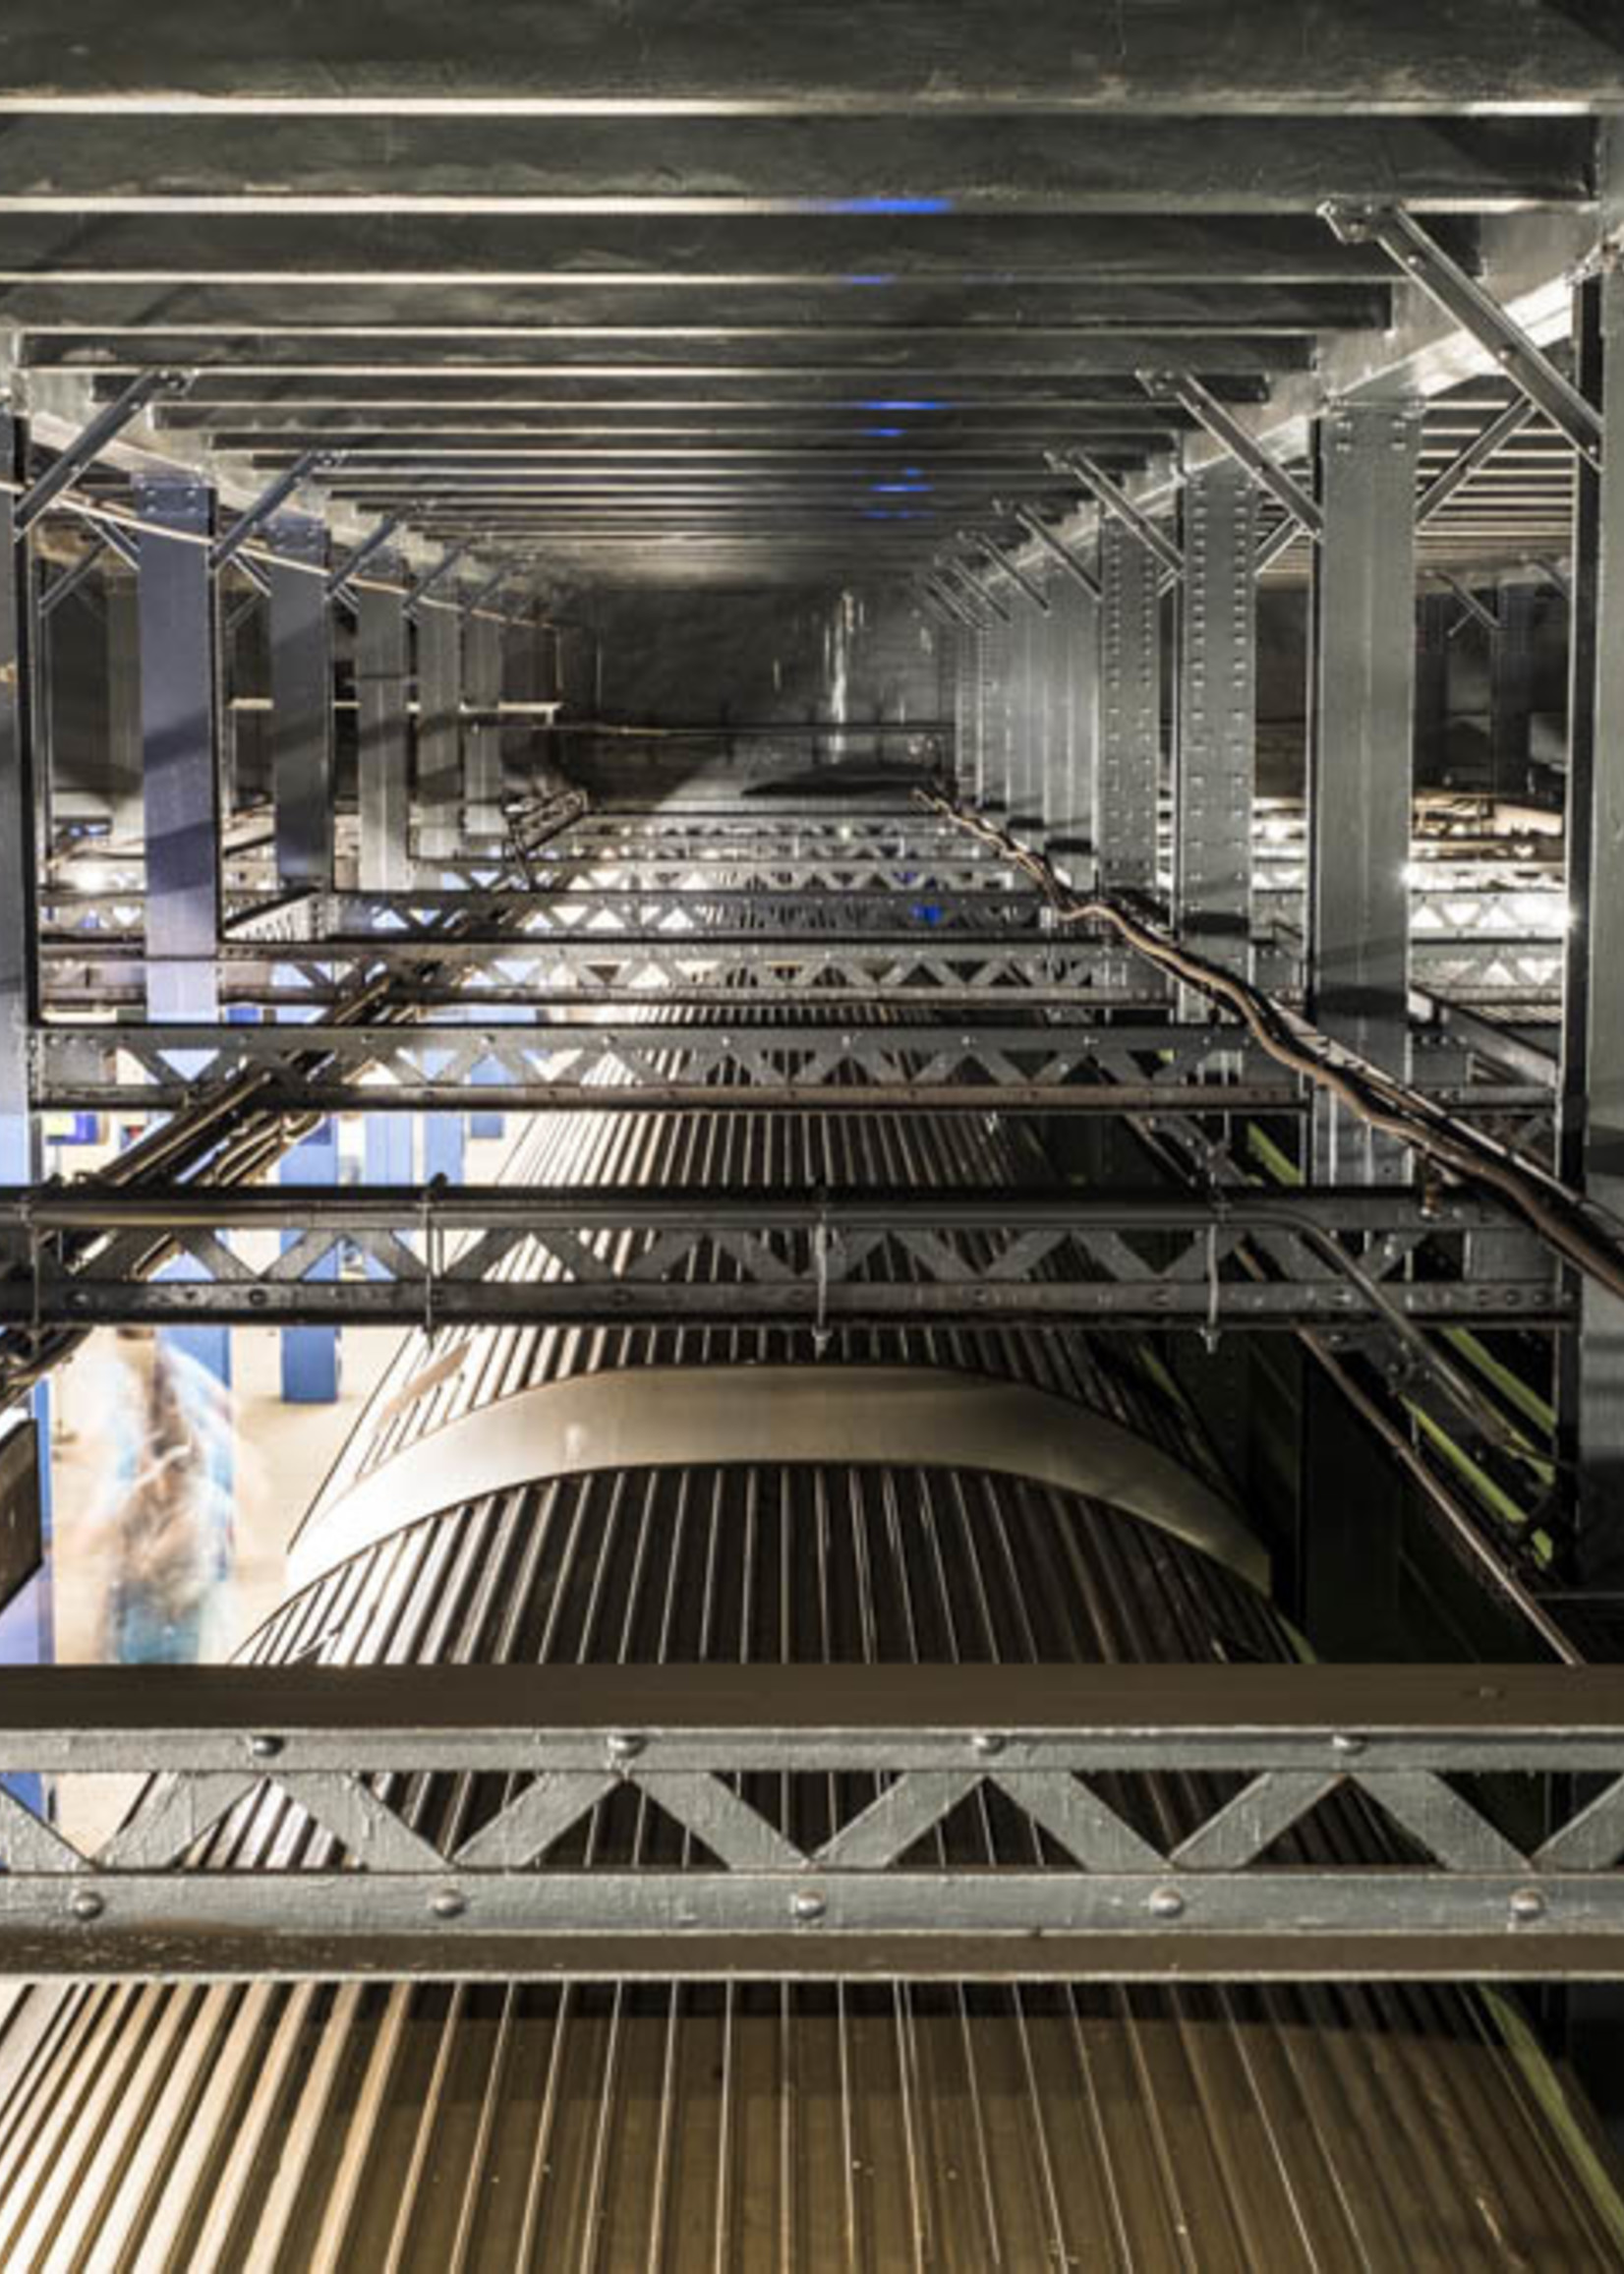 Frans van Steijn Wall photo "NY Metal Metro" Aluminum on Dibond 120 cm